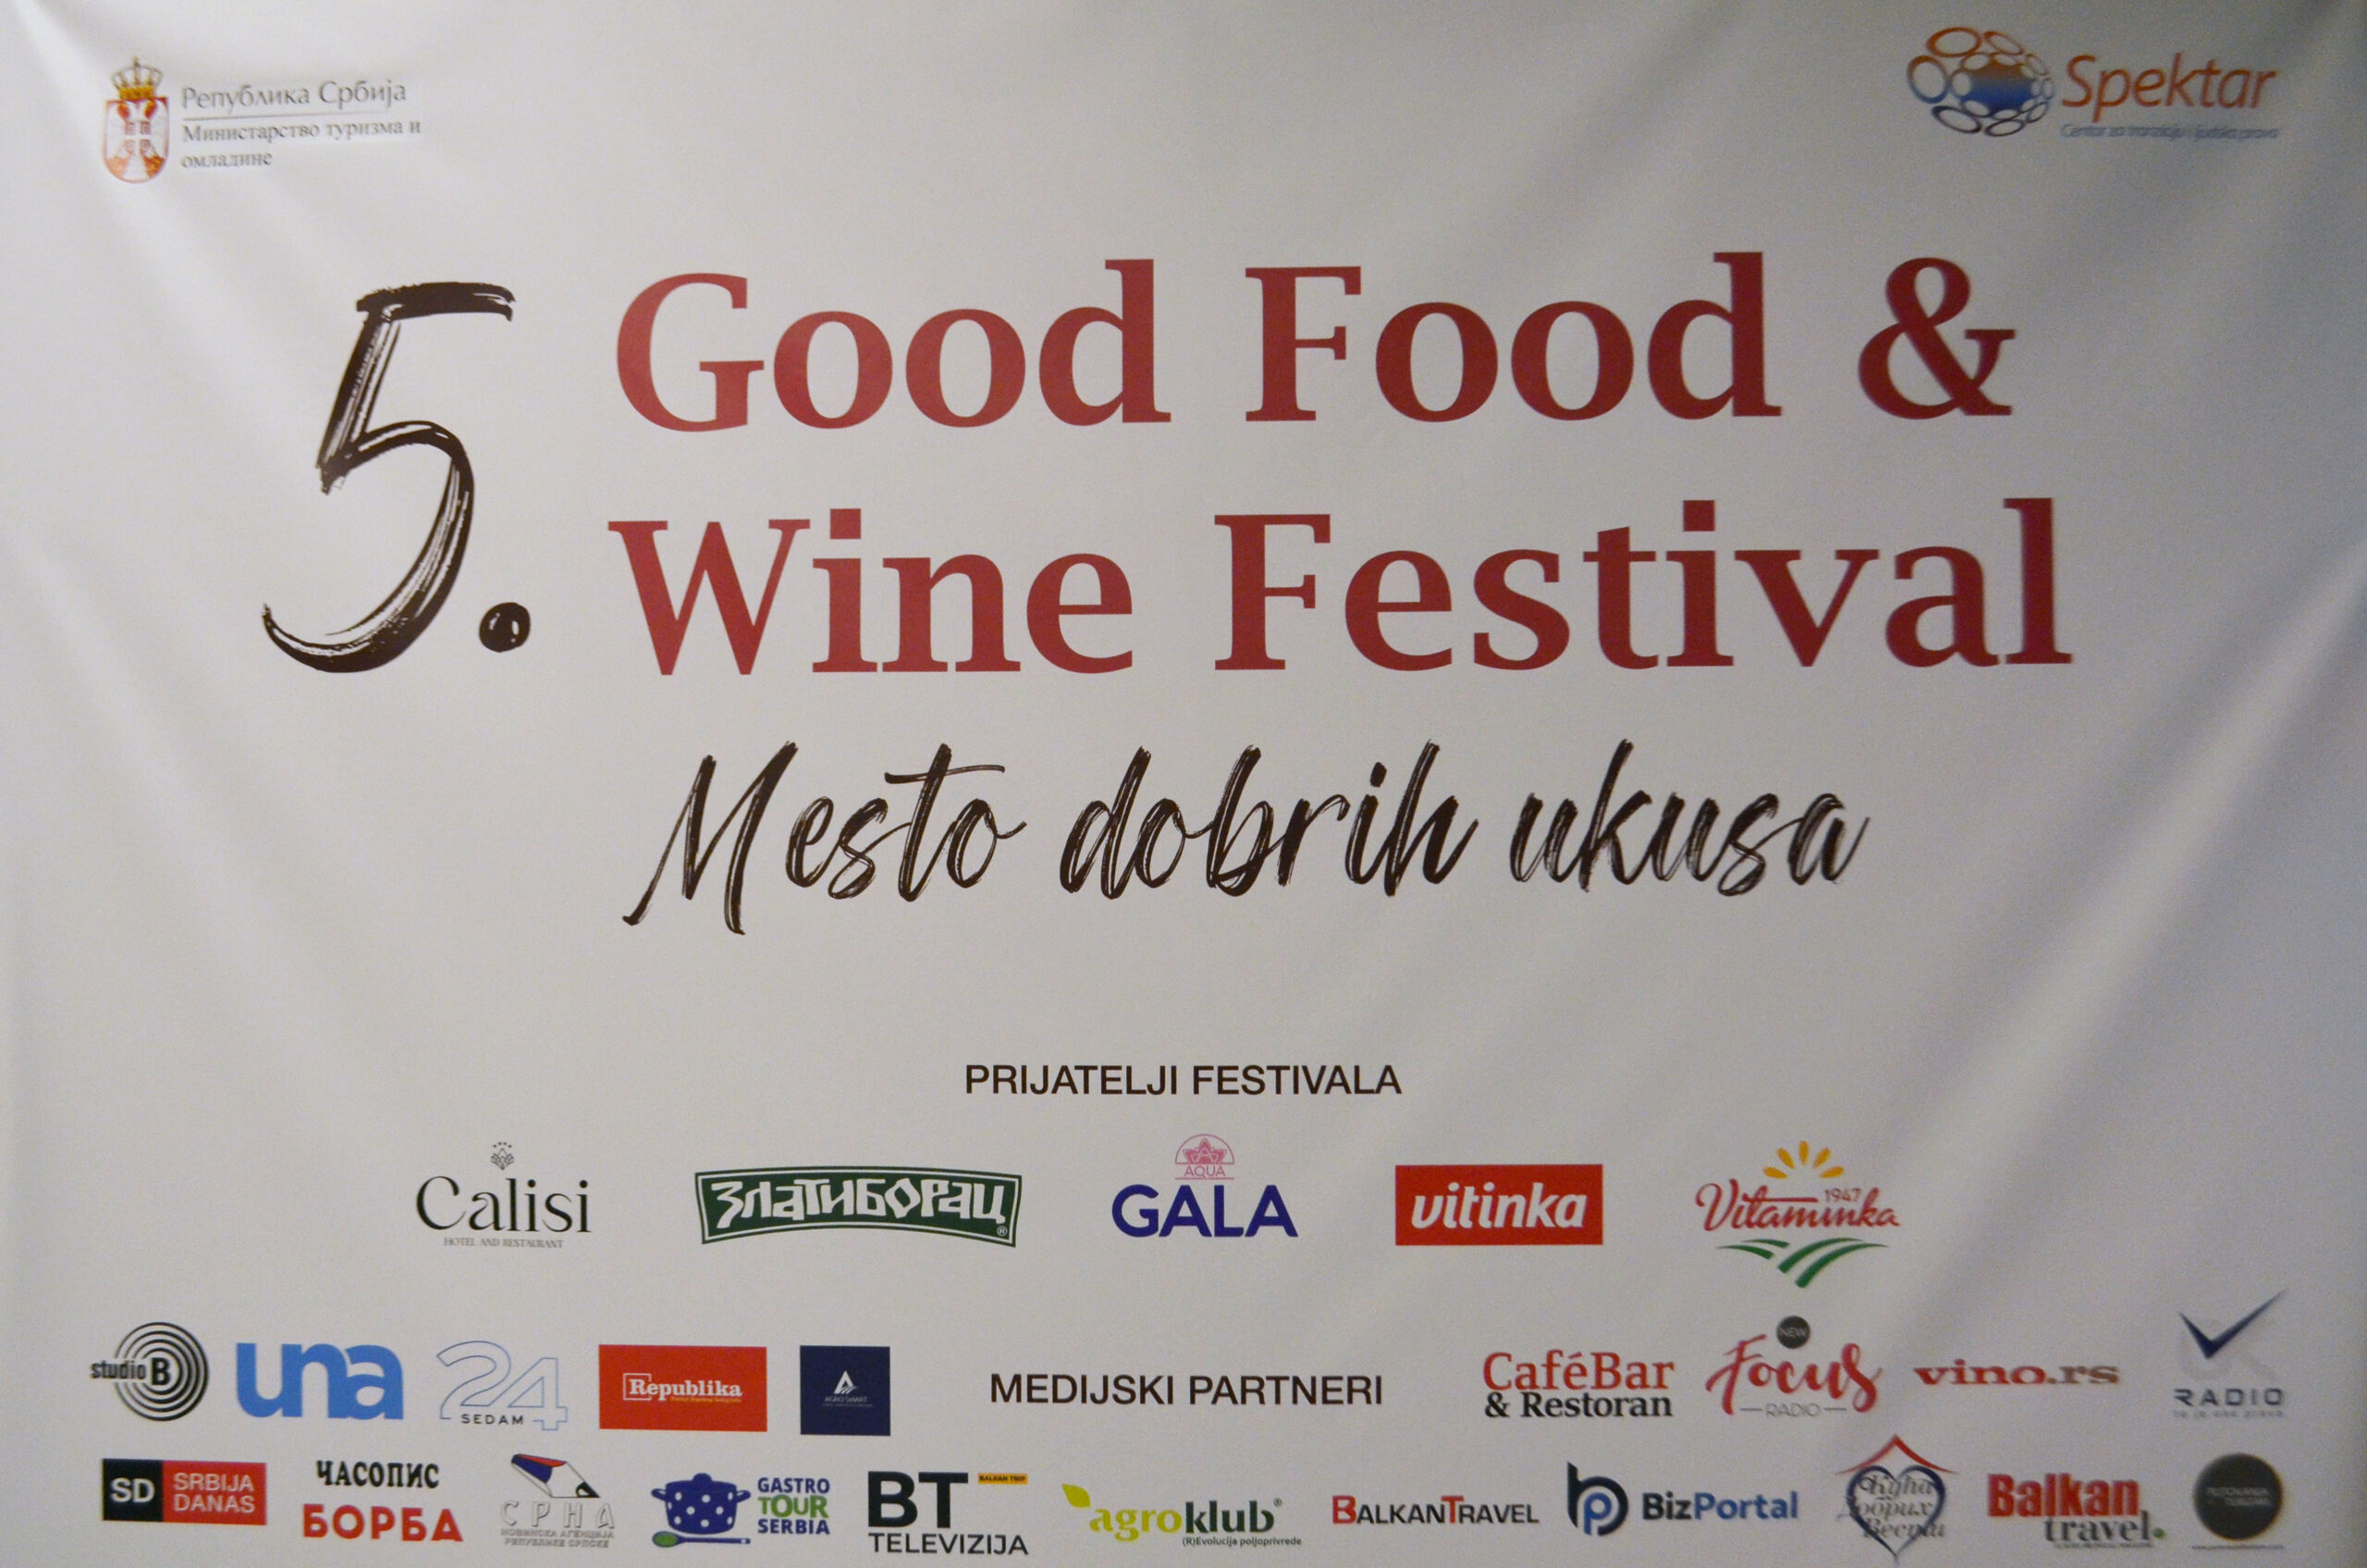 Good Food & Wine Festival - epicentar vinske i kulinarske scene